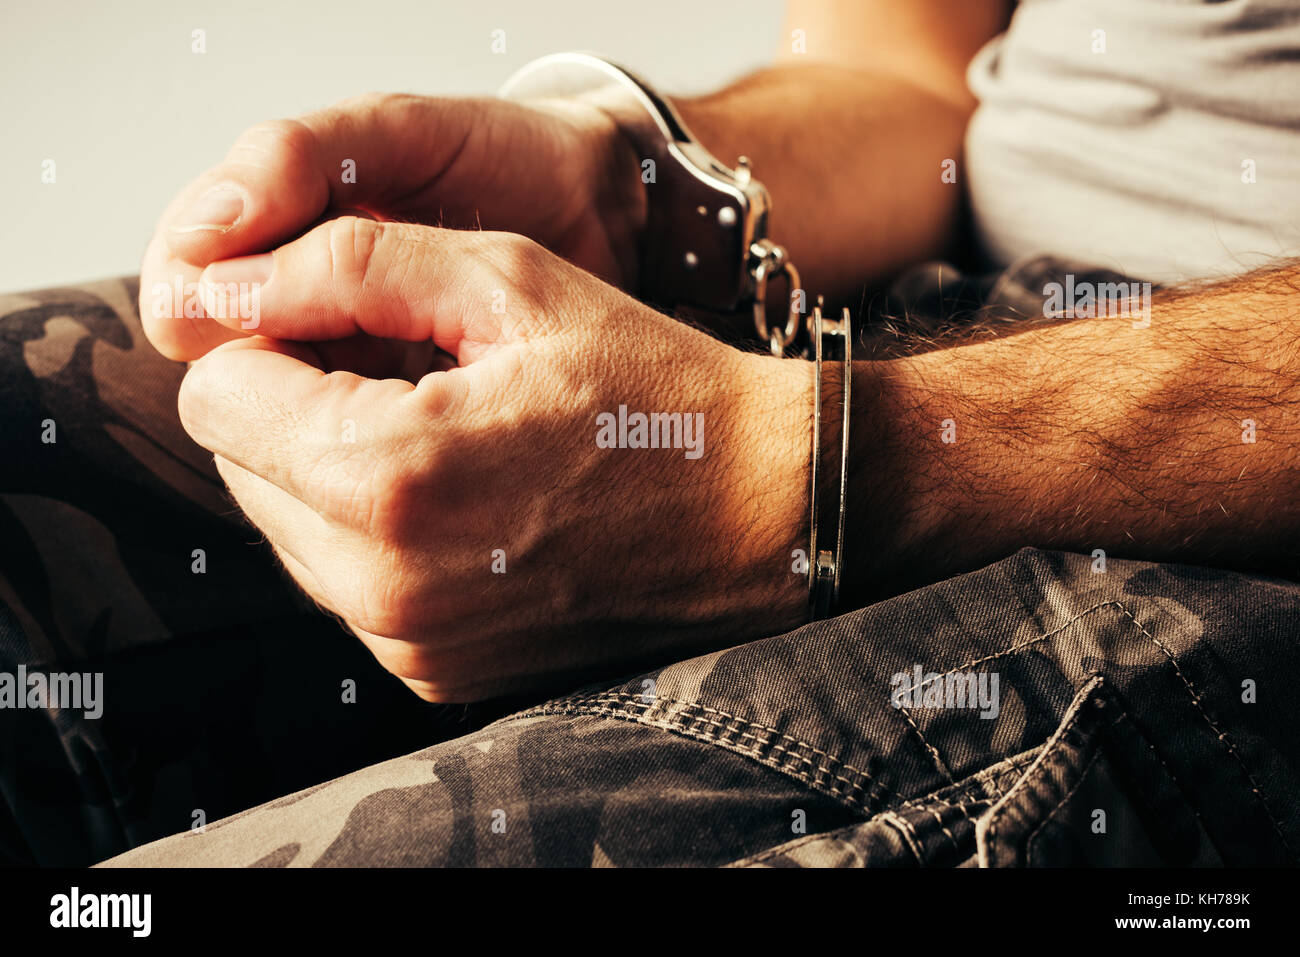 Handschellen Soldat in Militär Armee Kleidung. kriegsgefangenschaft oder Terrorist verhaftet, bis der Hände in Handschellen, selektiven Fokus. Stockfoto